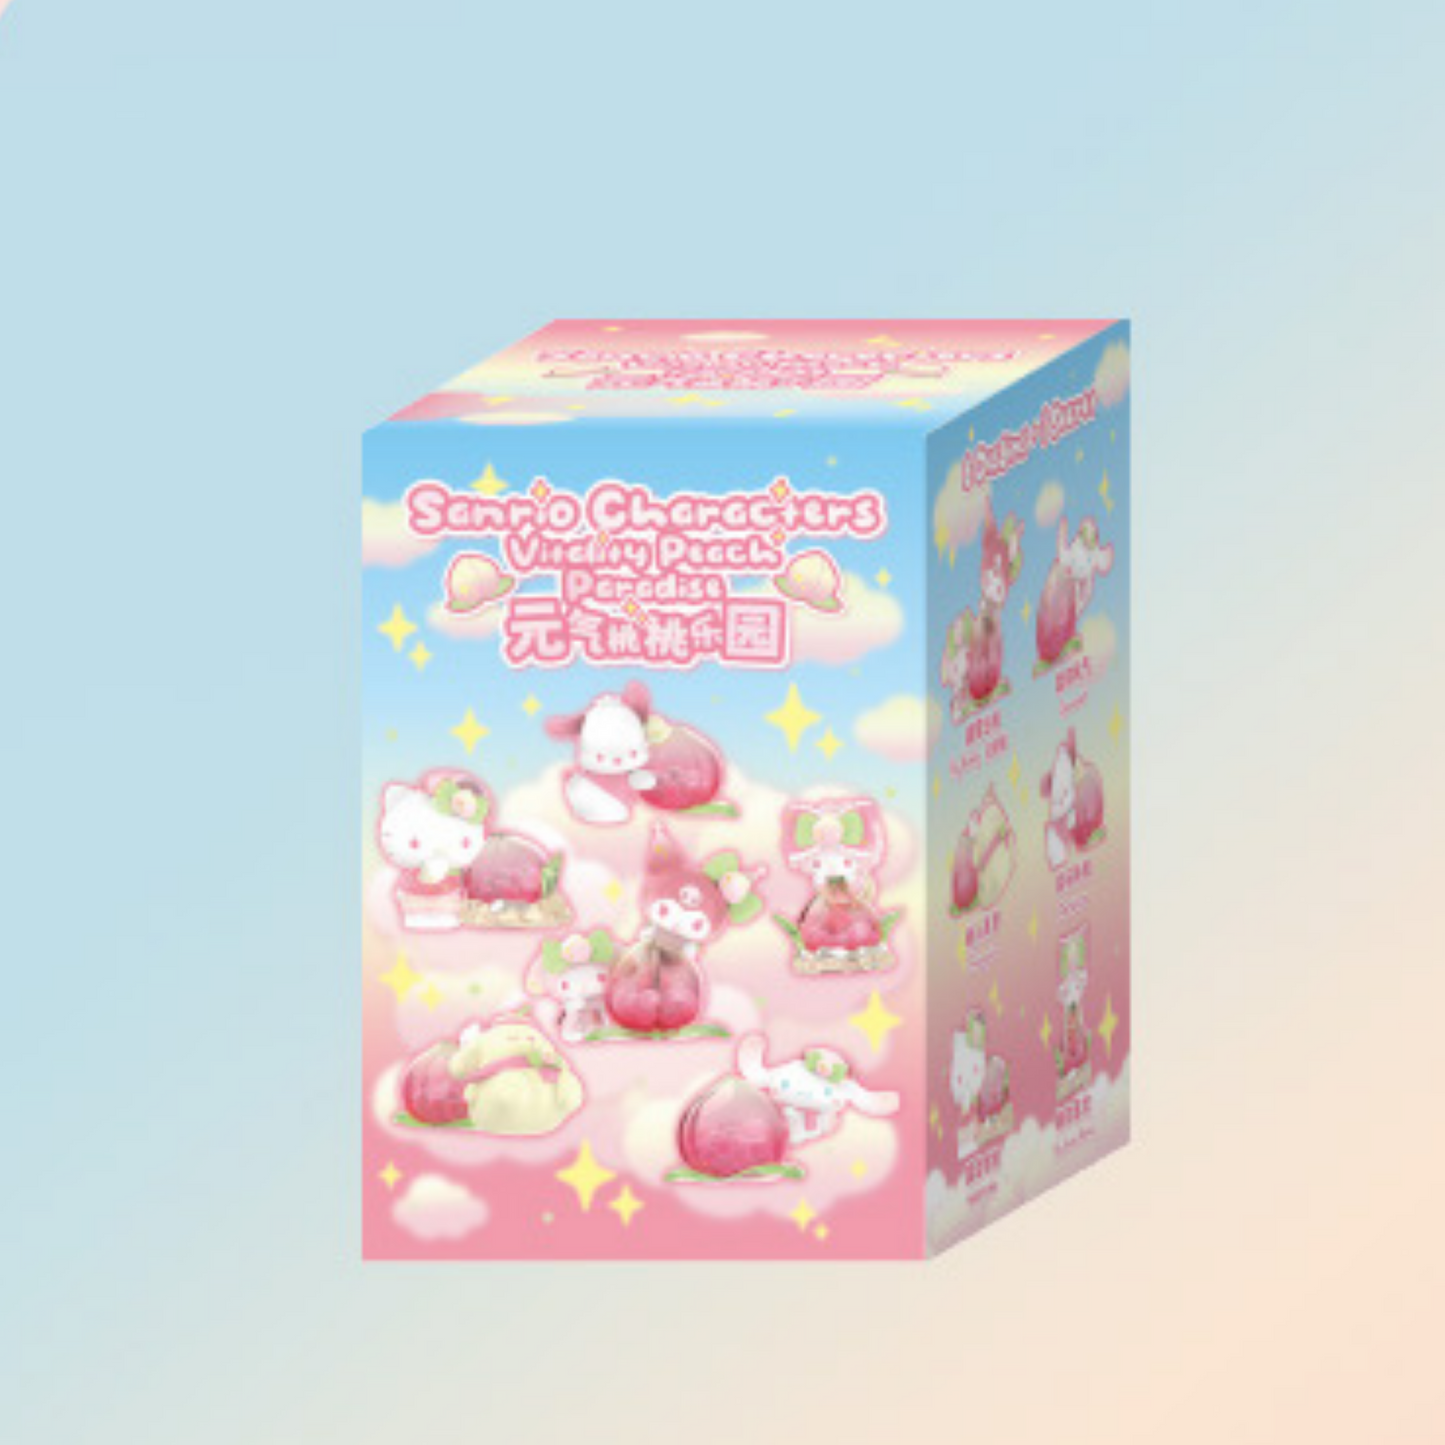 【Restock】Top Toy Sanrio Characters: Vitality Peach Paradise Series Blind Box Random Style